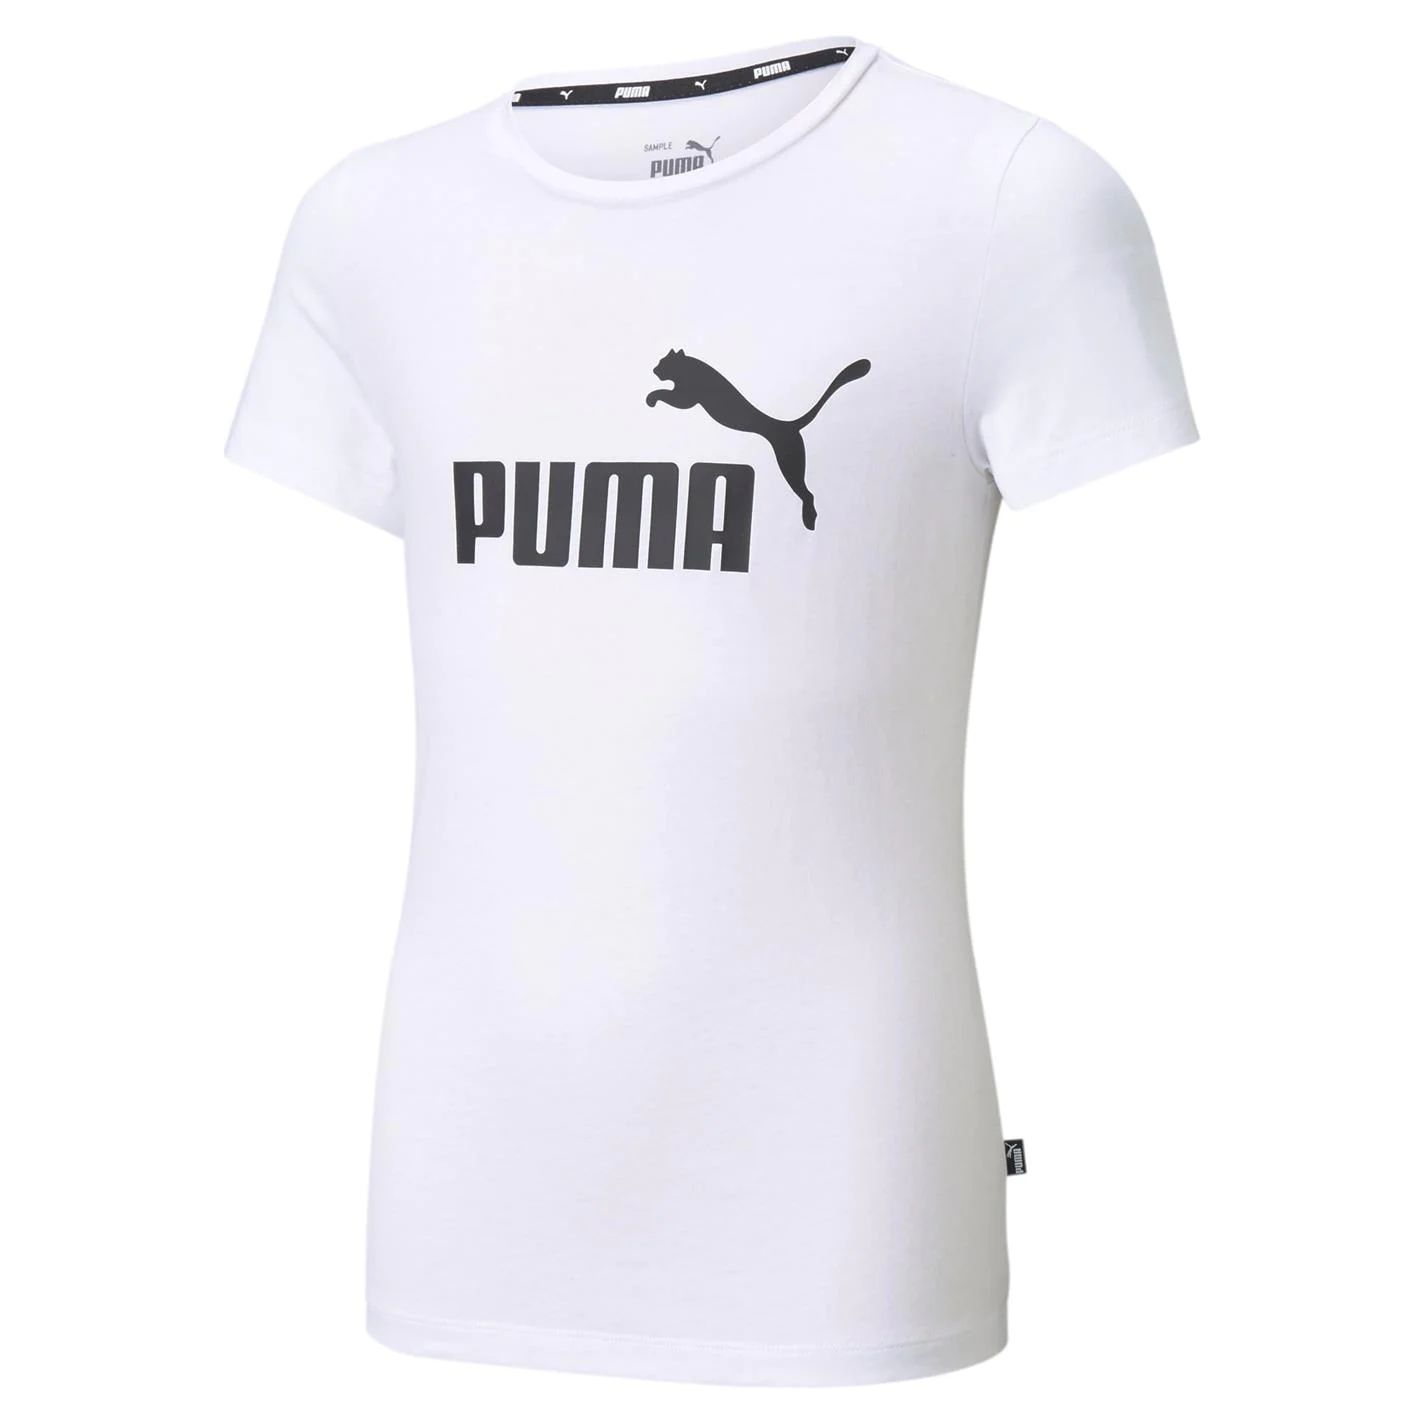 dětské tričko PUMA - WHITE/BLACK - 152 11-12 let